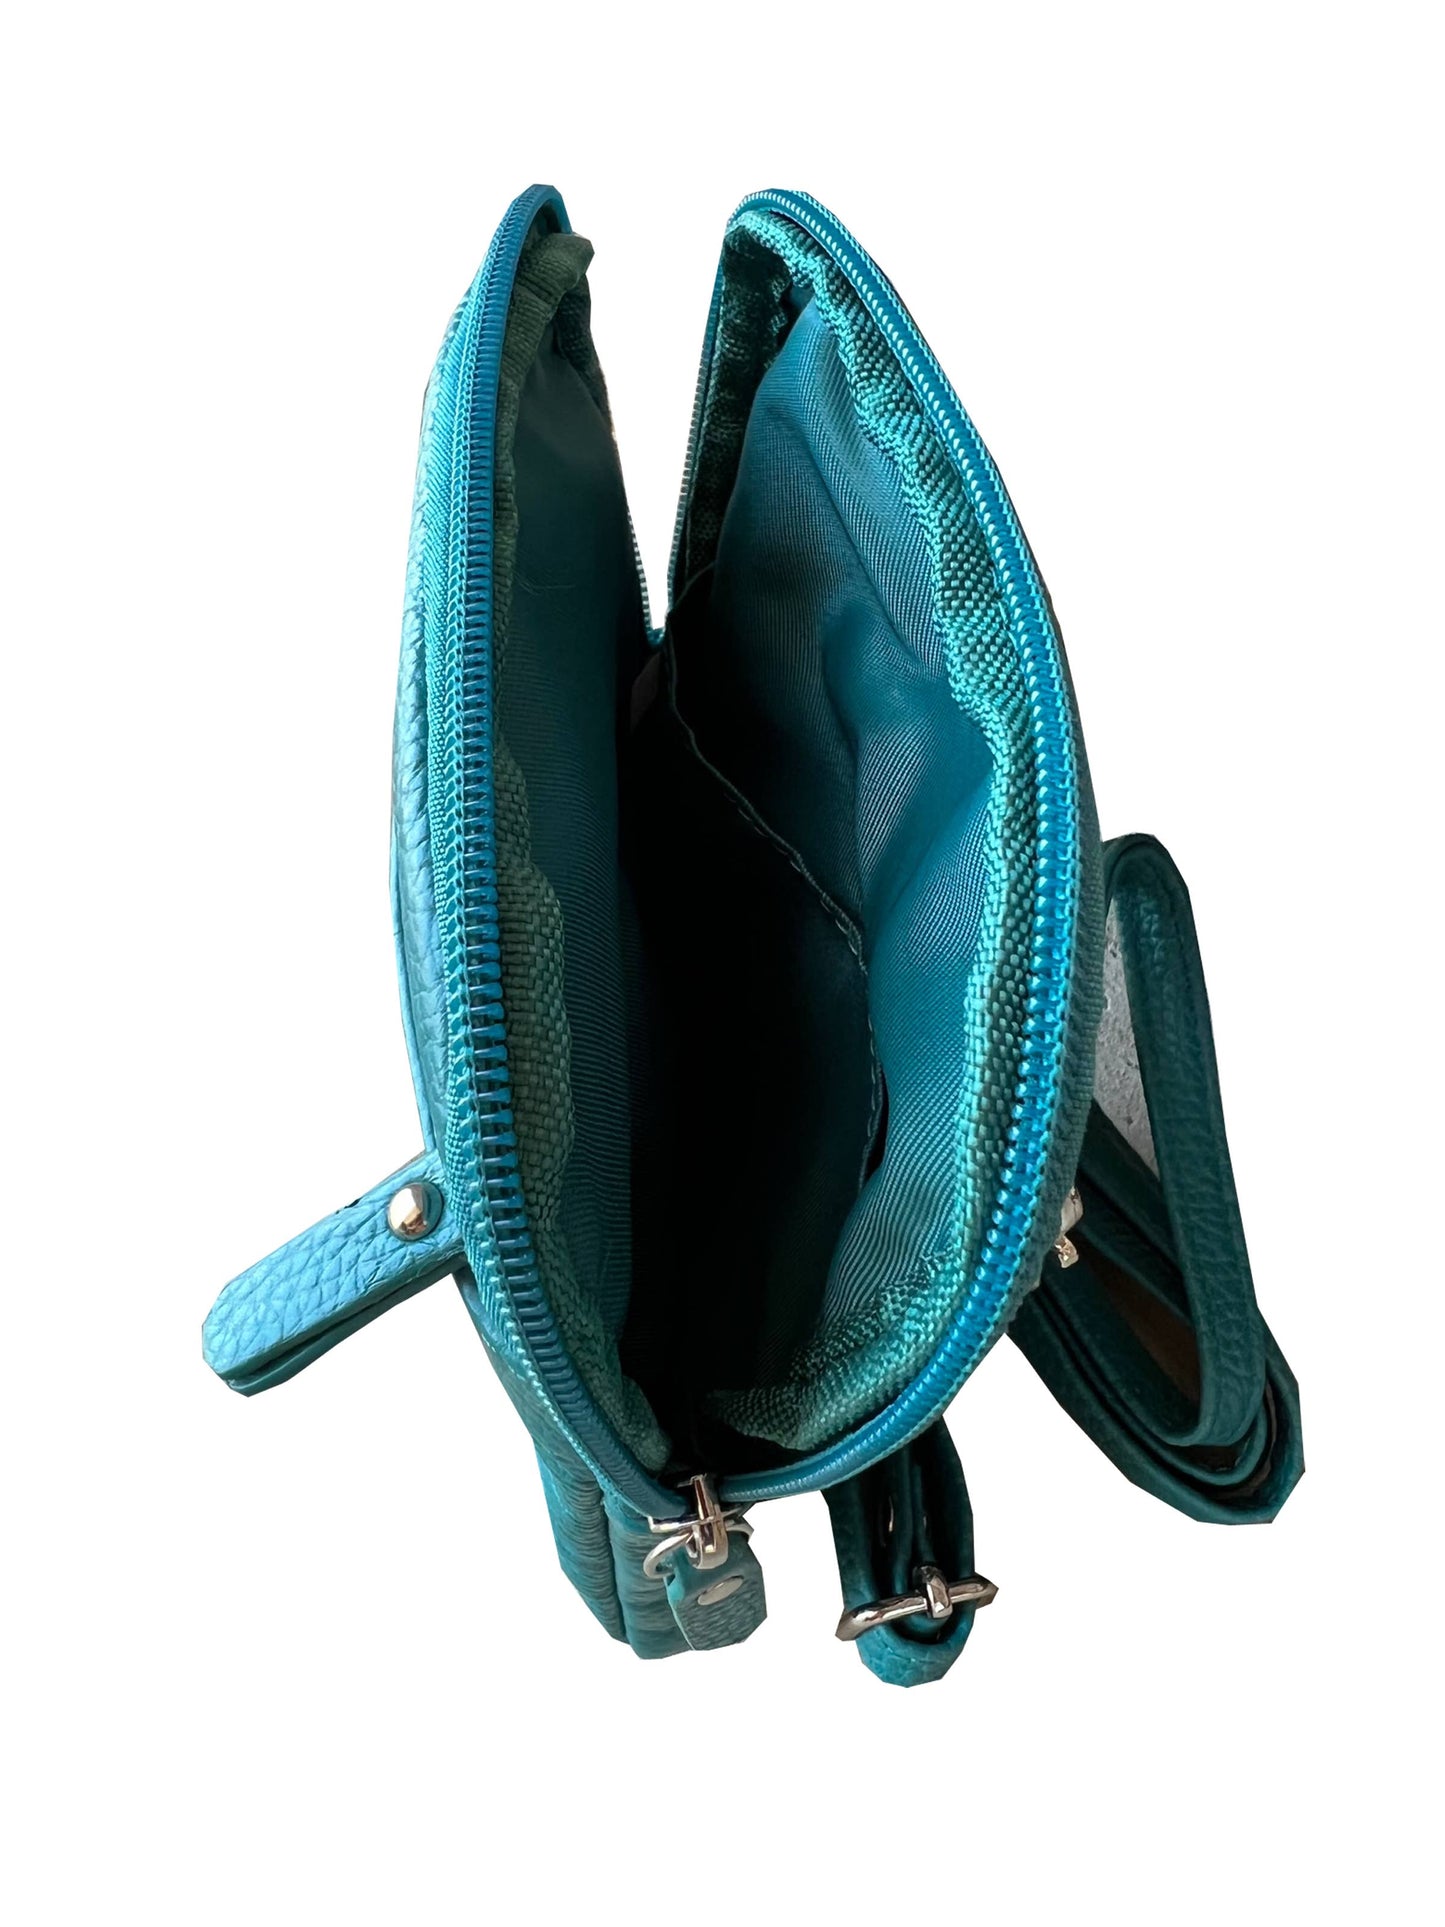 Leather Compact Crossbody Purse + Belt Bag